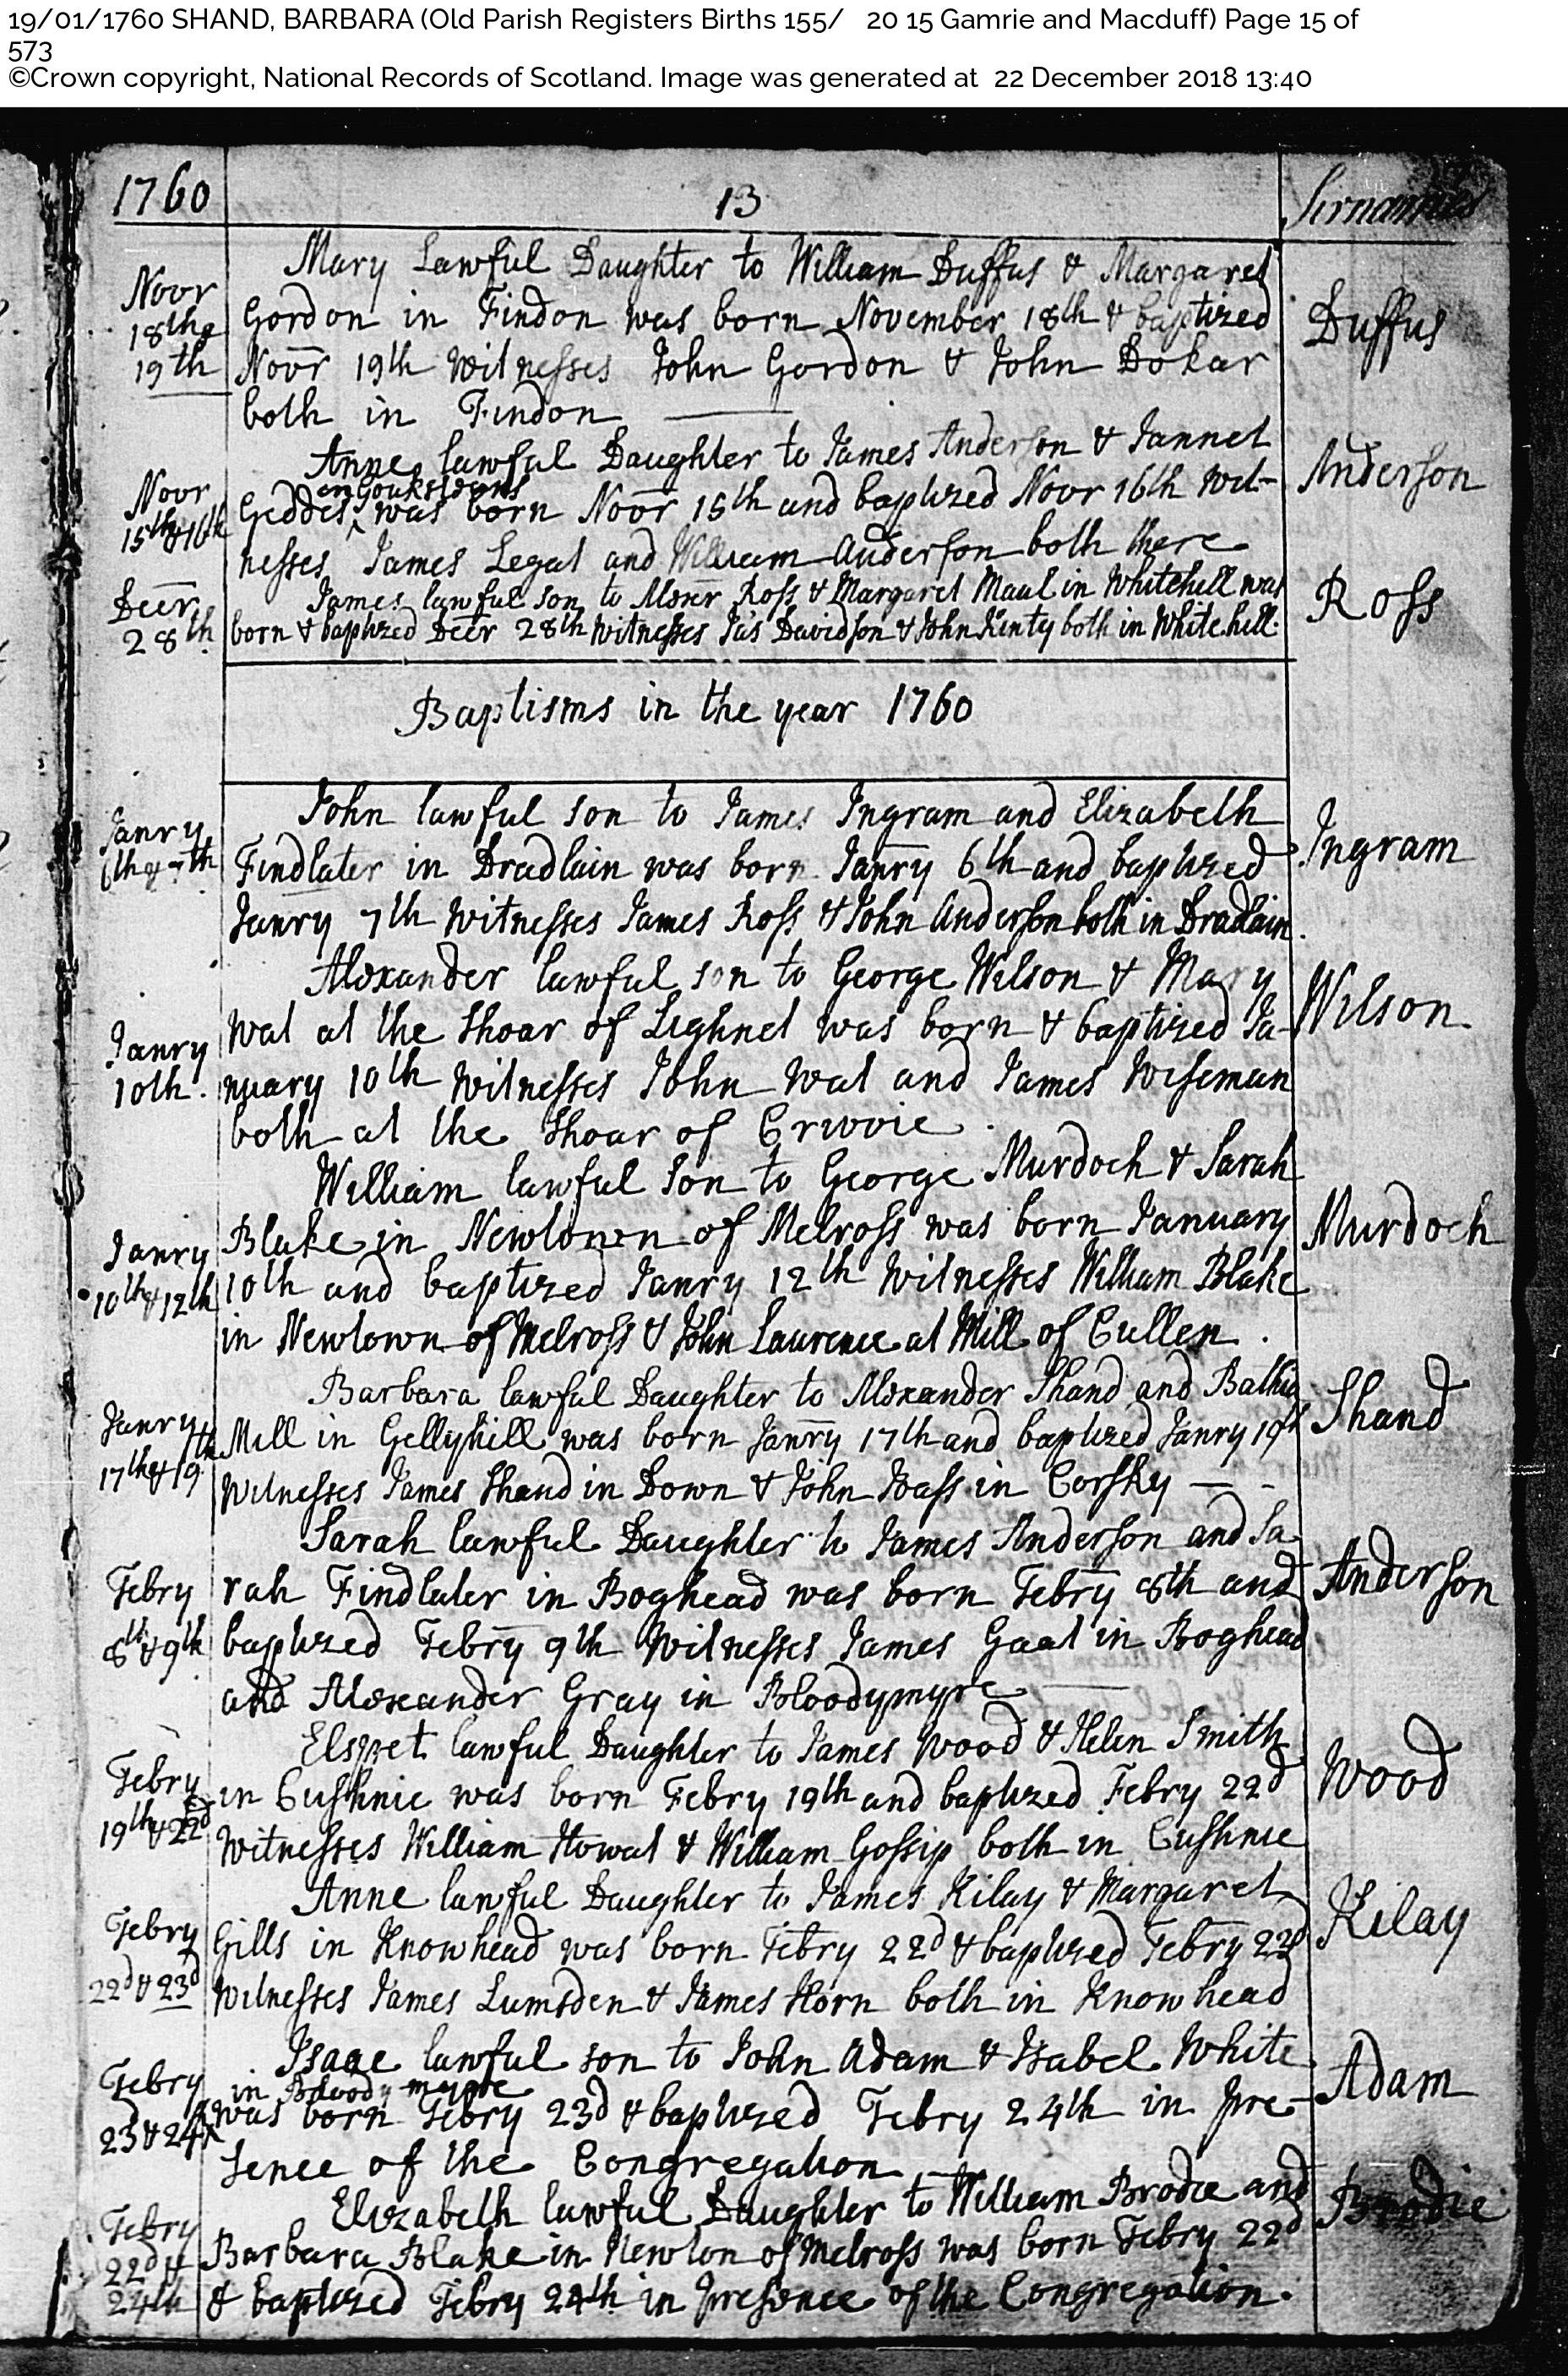 BarbaraShand_B1760 Gellyhill Banff, January 17, 1760